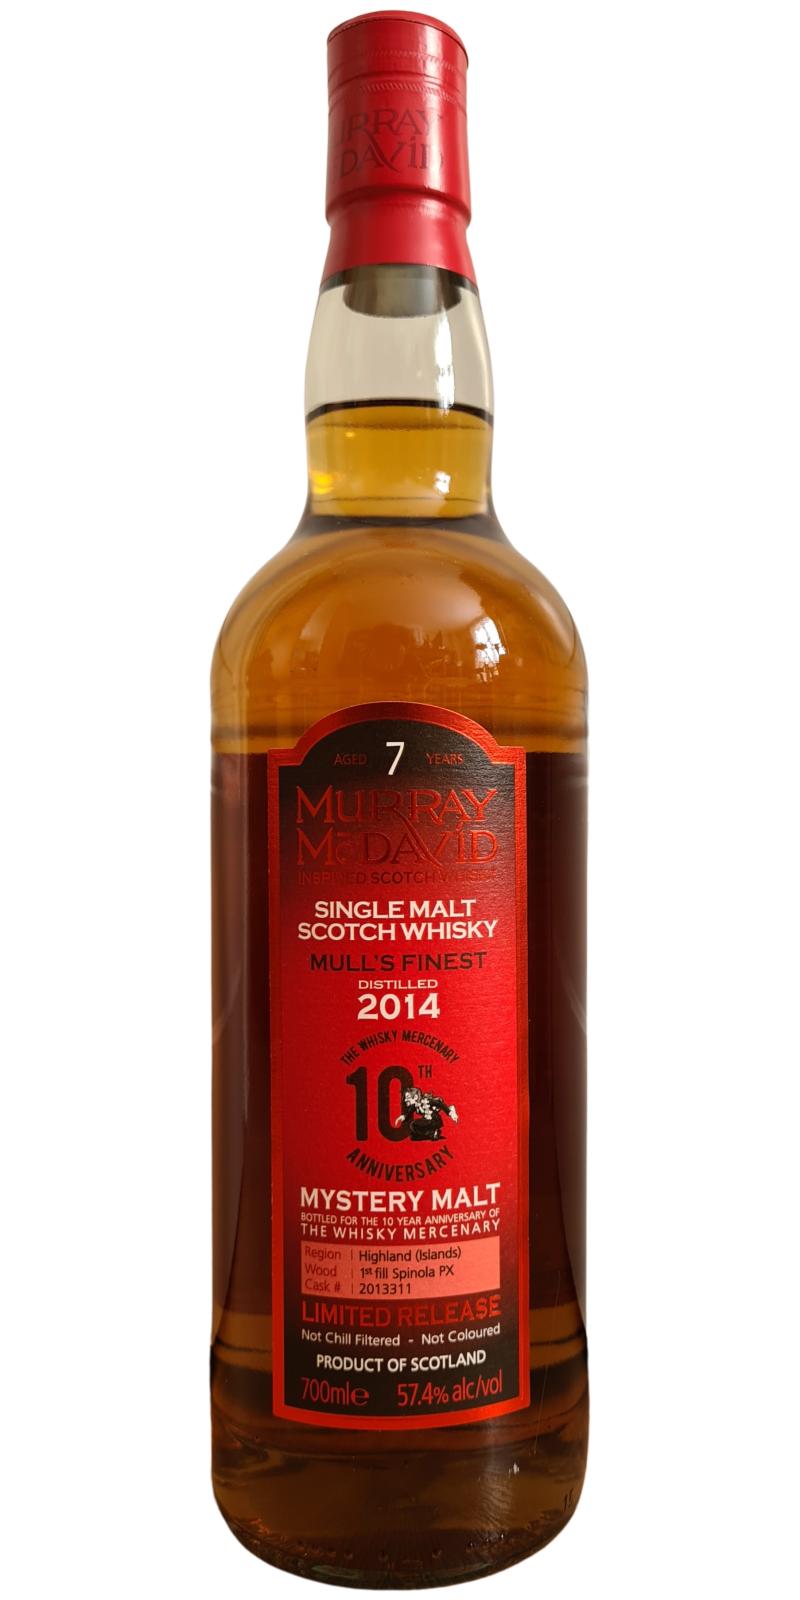 Ledaig 2014 MM 1st Fill Spinola PX Whisky Mercenary 57.4% 700ml